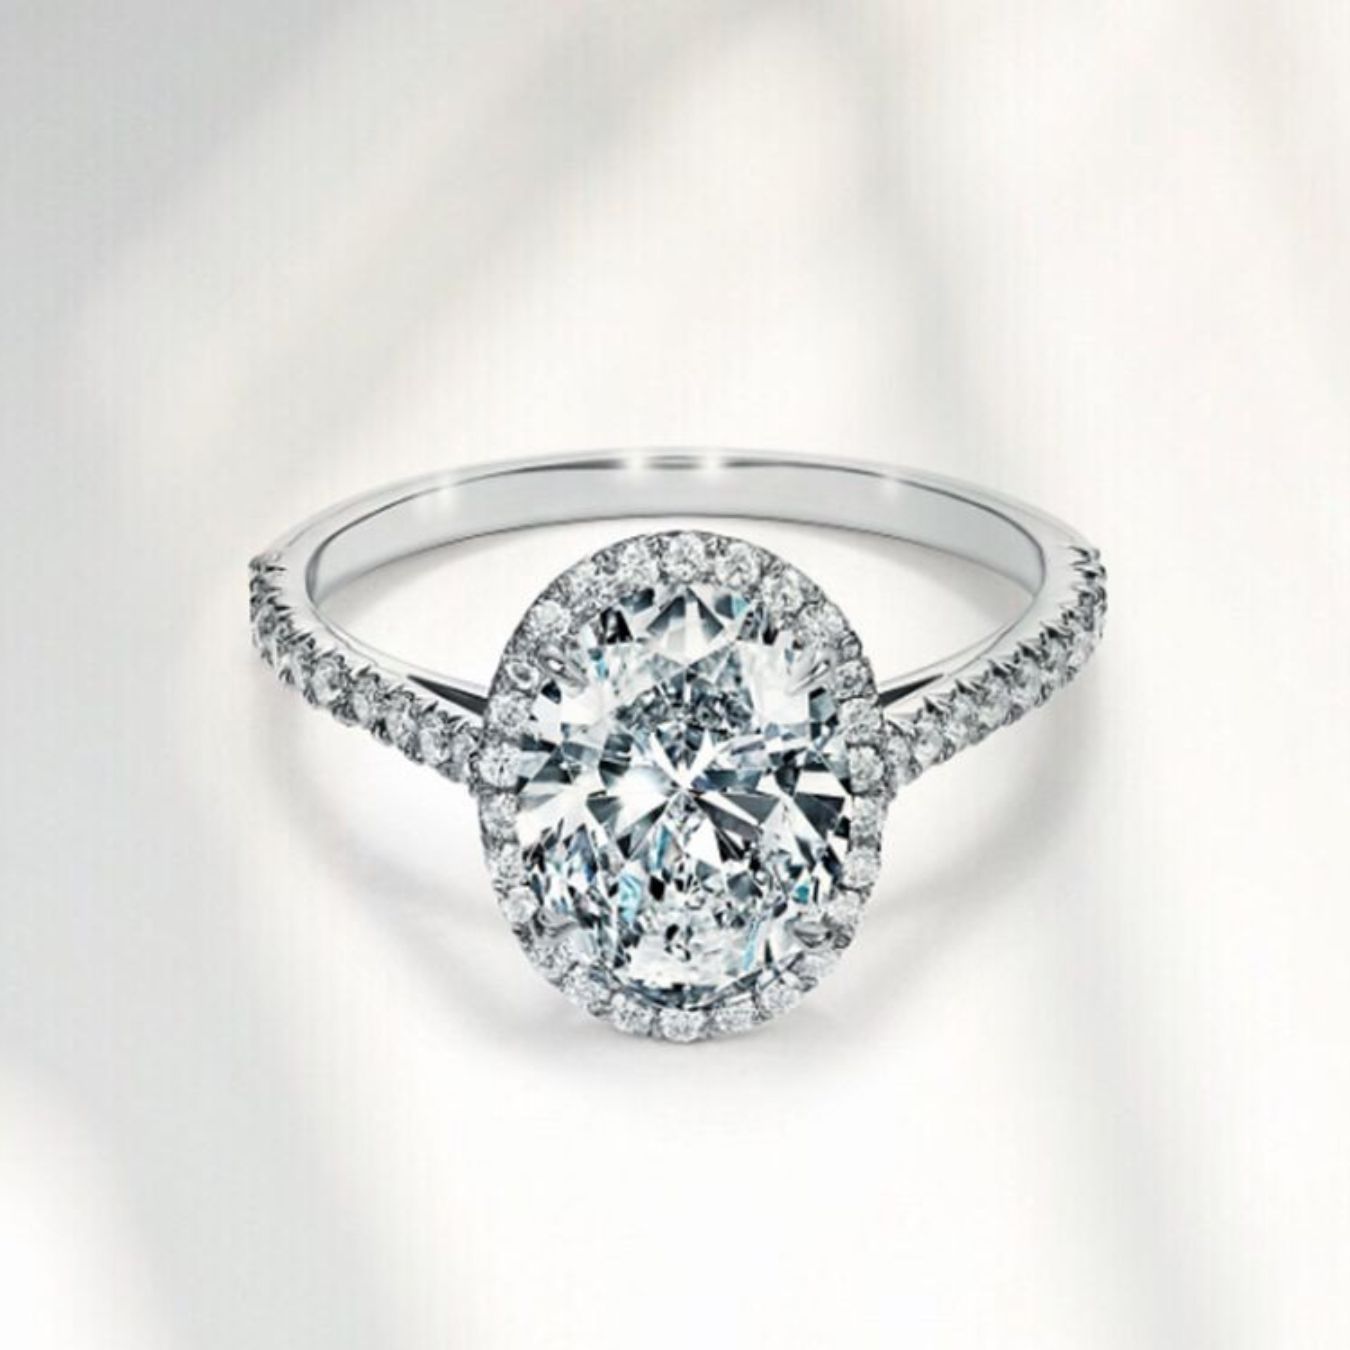 Oval diamonds are just so beautiful.￼